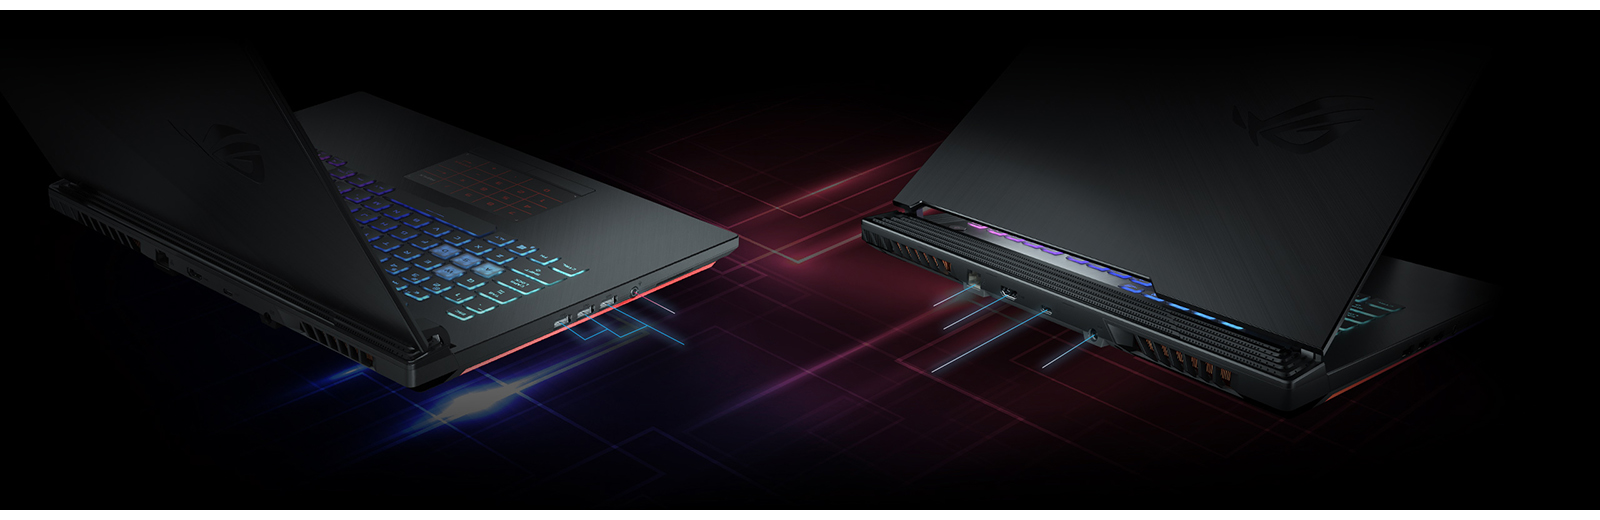 Laptop Asus Gaming ROG Strix G512-IAL001T (i7 10750H/8GB RAM/512GB SSD/15.6 FHD 144hz/GTX 1650Ti 4GB